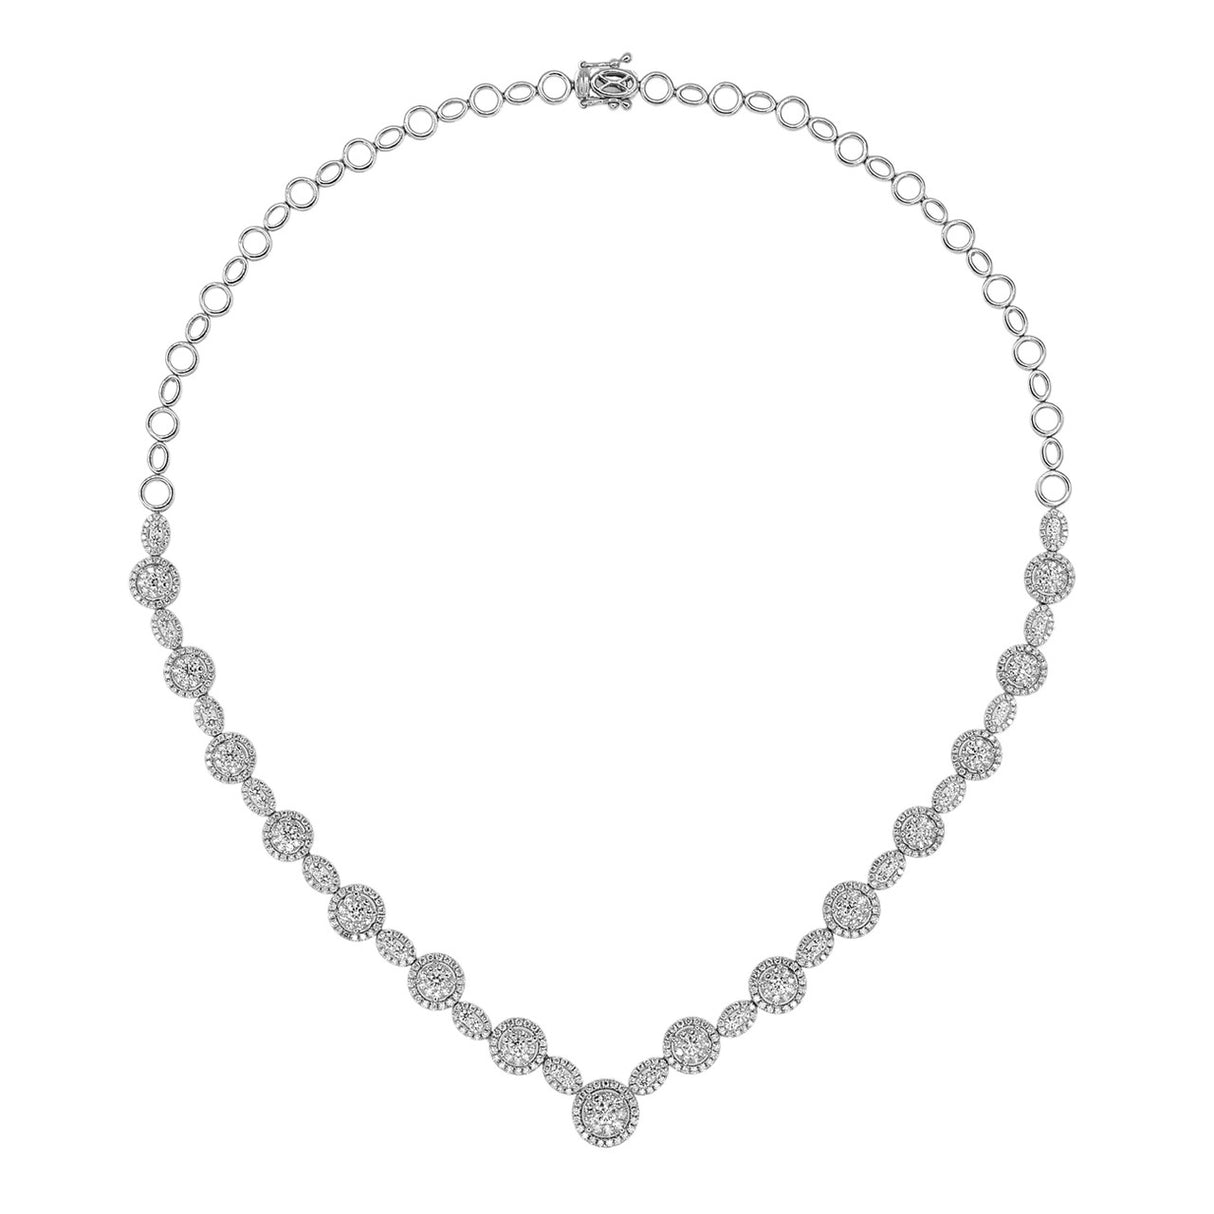 18K White Gold 5.04 Carat Diamond Necklace